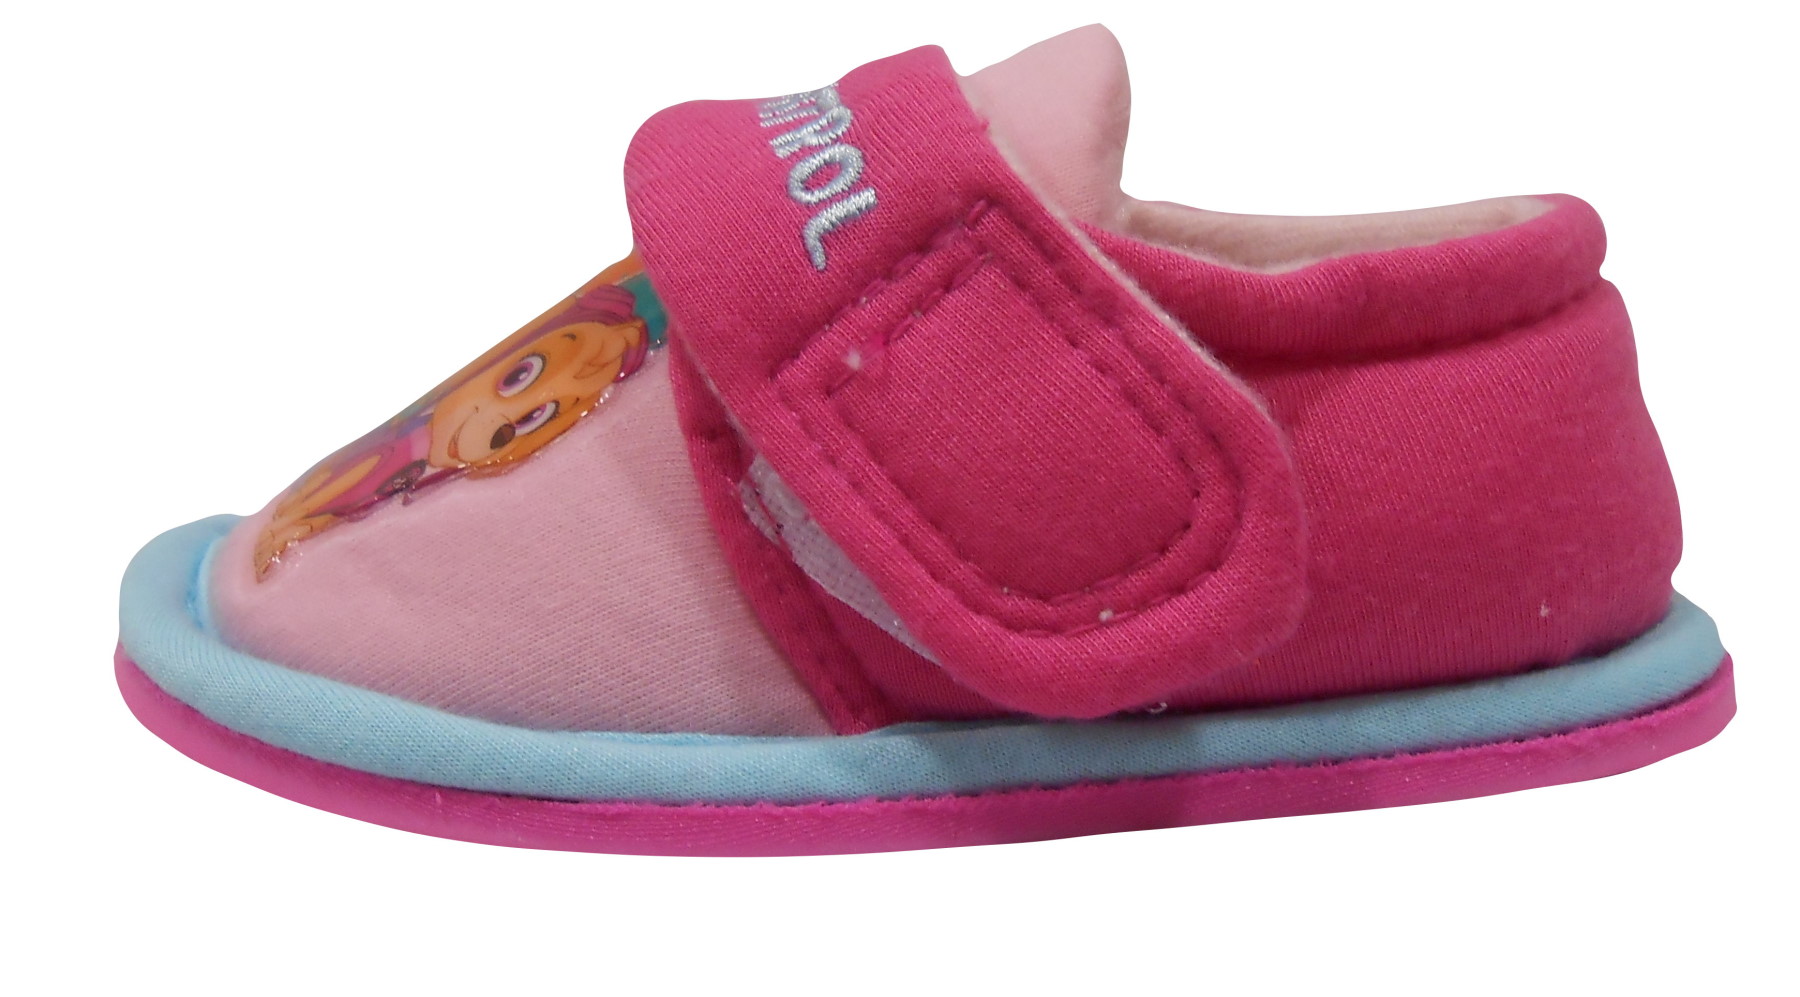 pink pwp 56991 slipper.JPG  by Thingimijigs